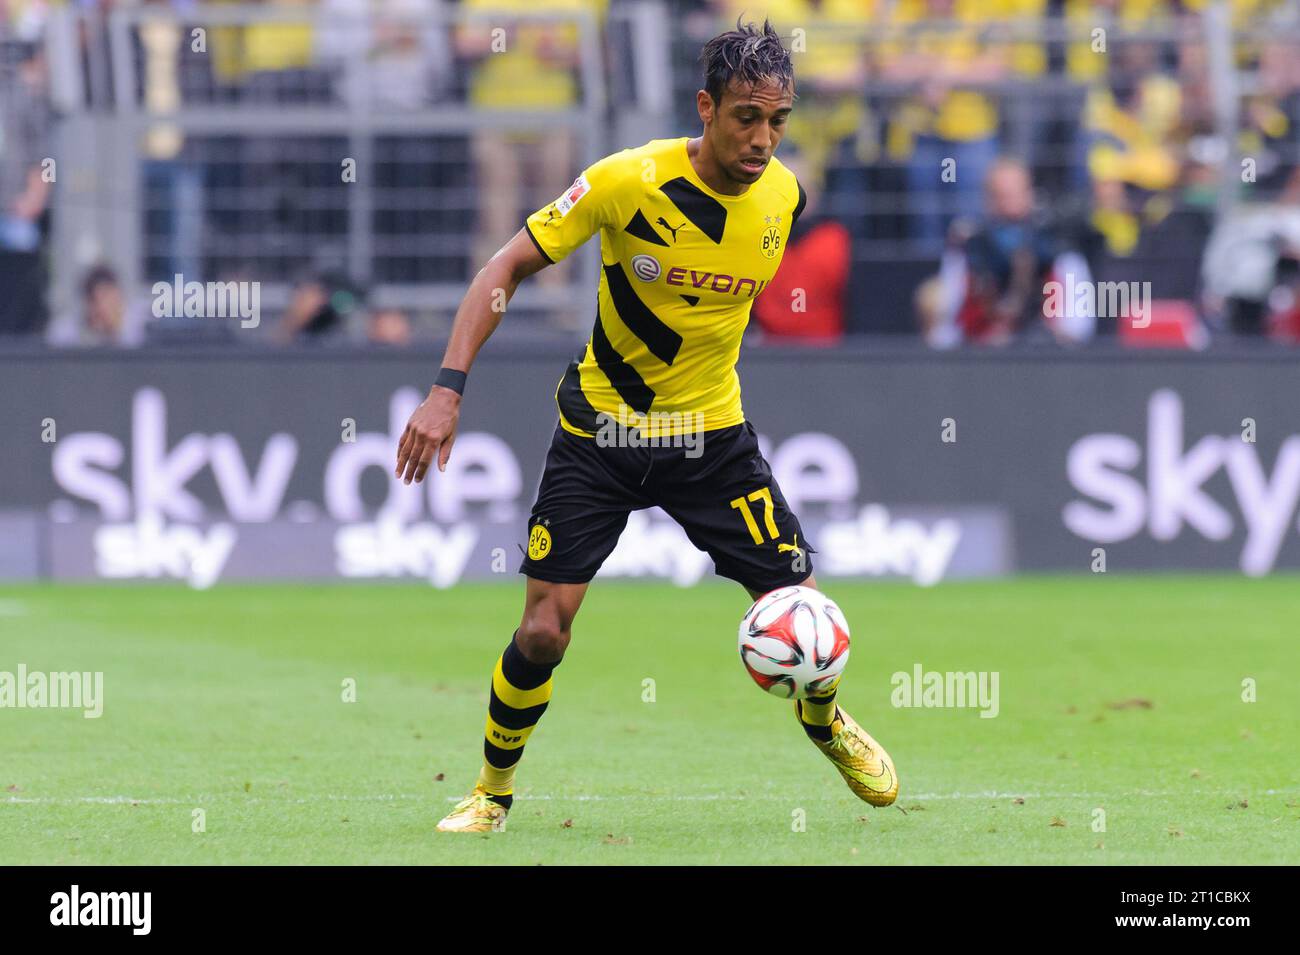 Pierre Emerick Aubameyang (17 - Borussia Dortmund) Fussball DFL Supercup in Dortmund, Deutschland am 13.08.2014 Stock Photo